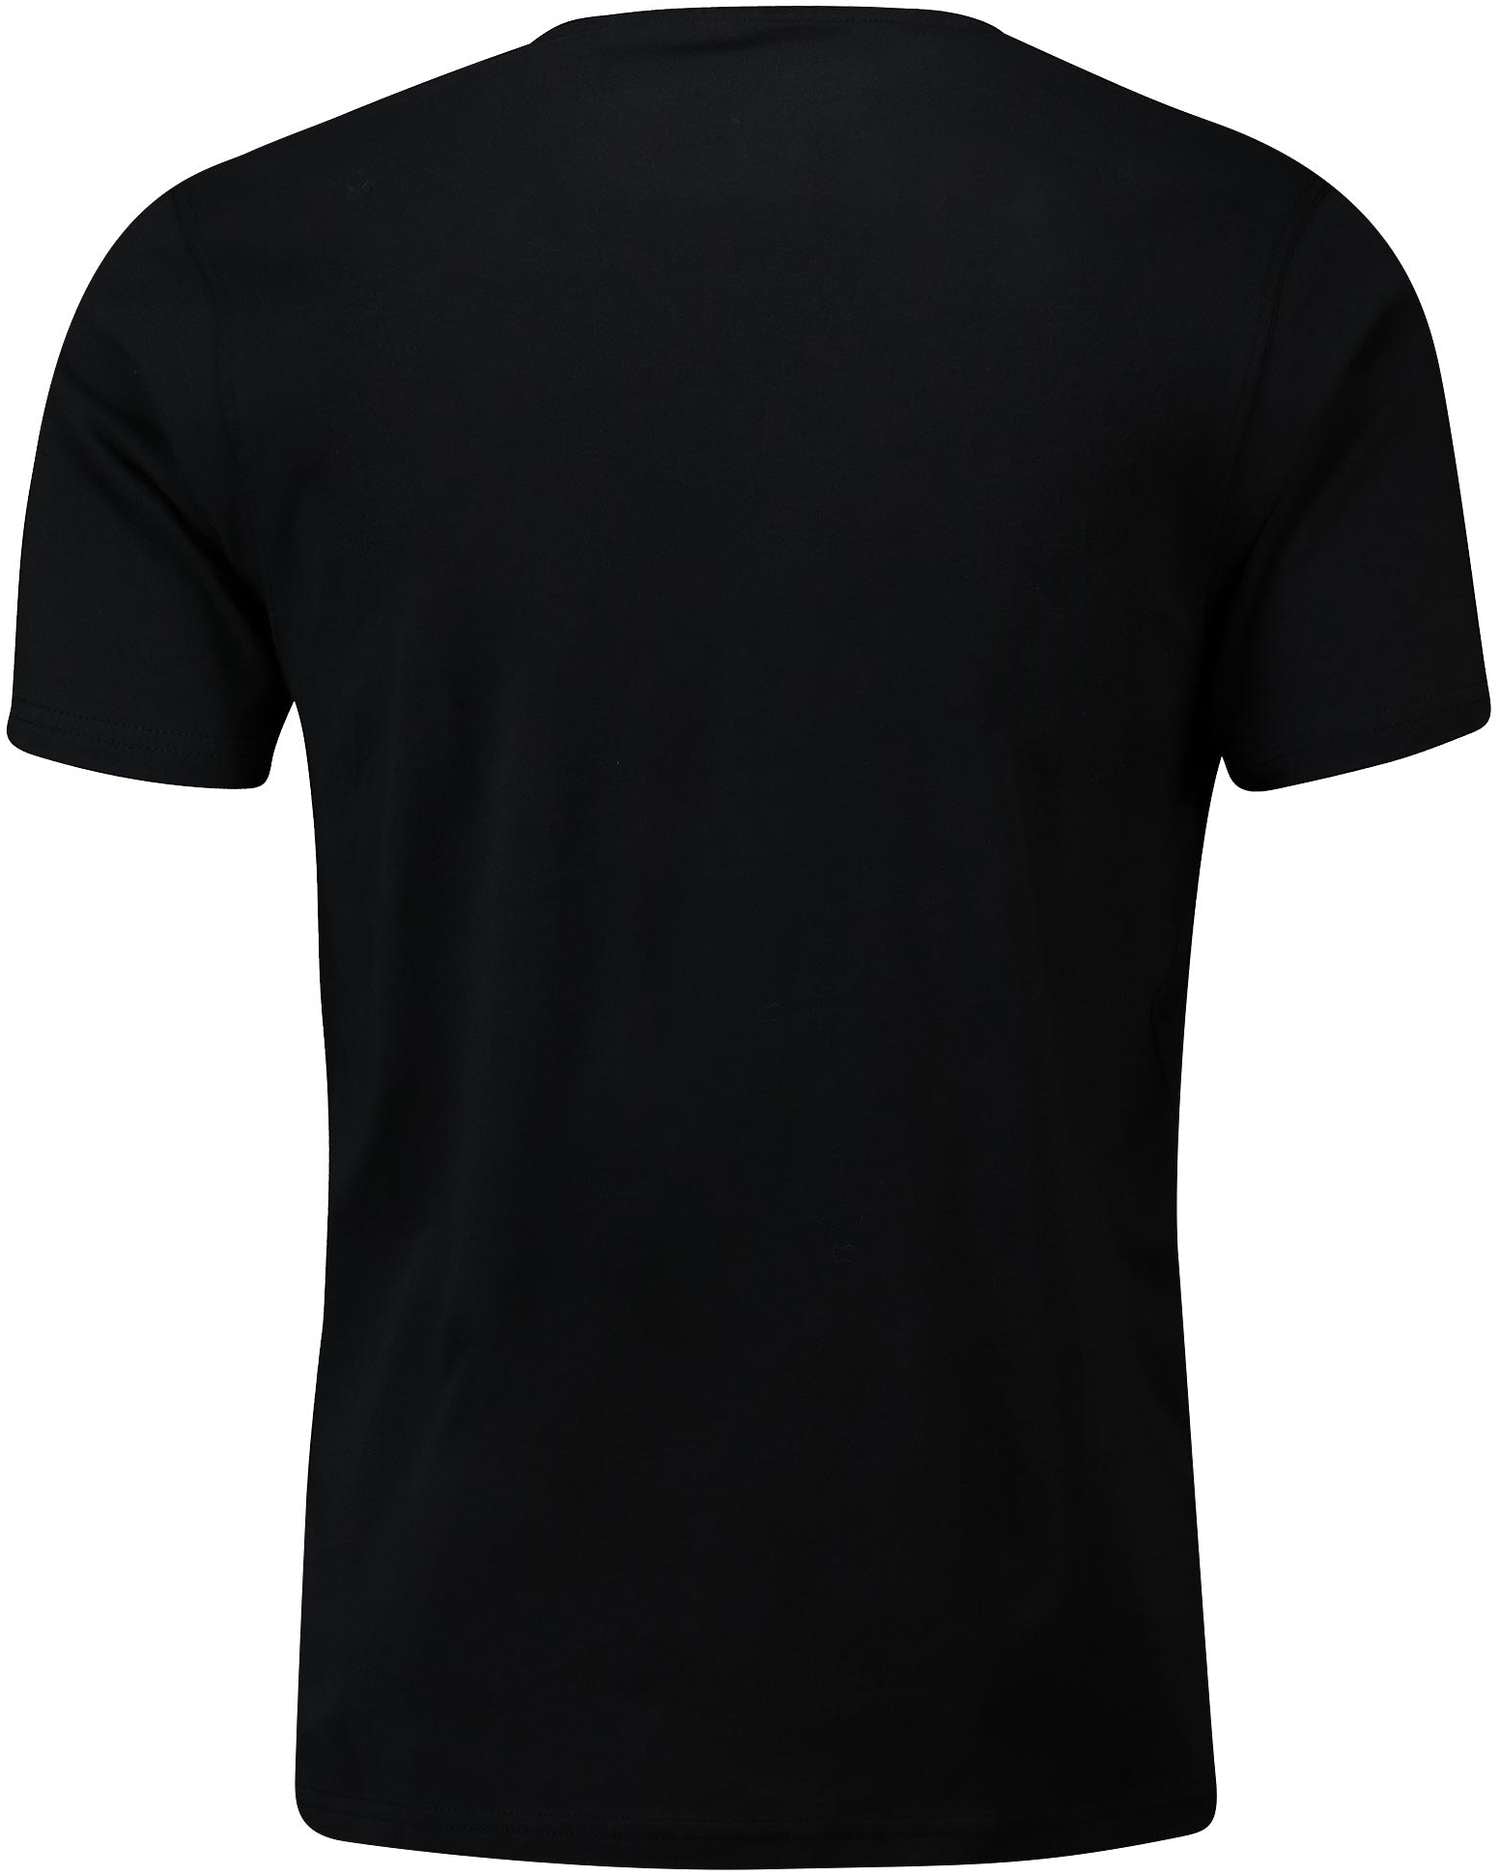 Fanatics - NHL New Jersey Devils Primary Core Graphic T-Shirt - Schwarz